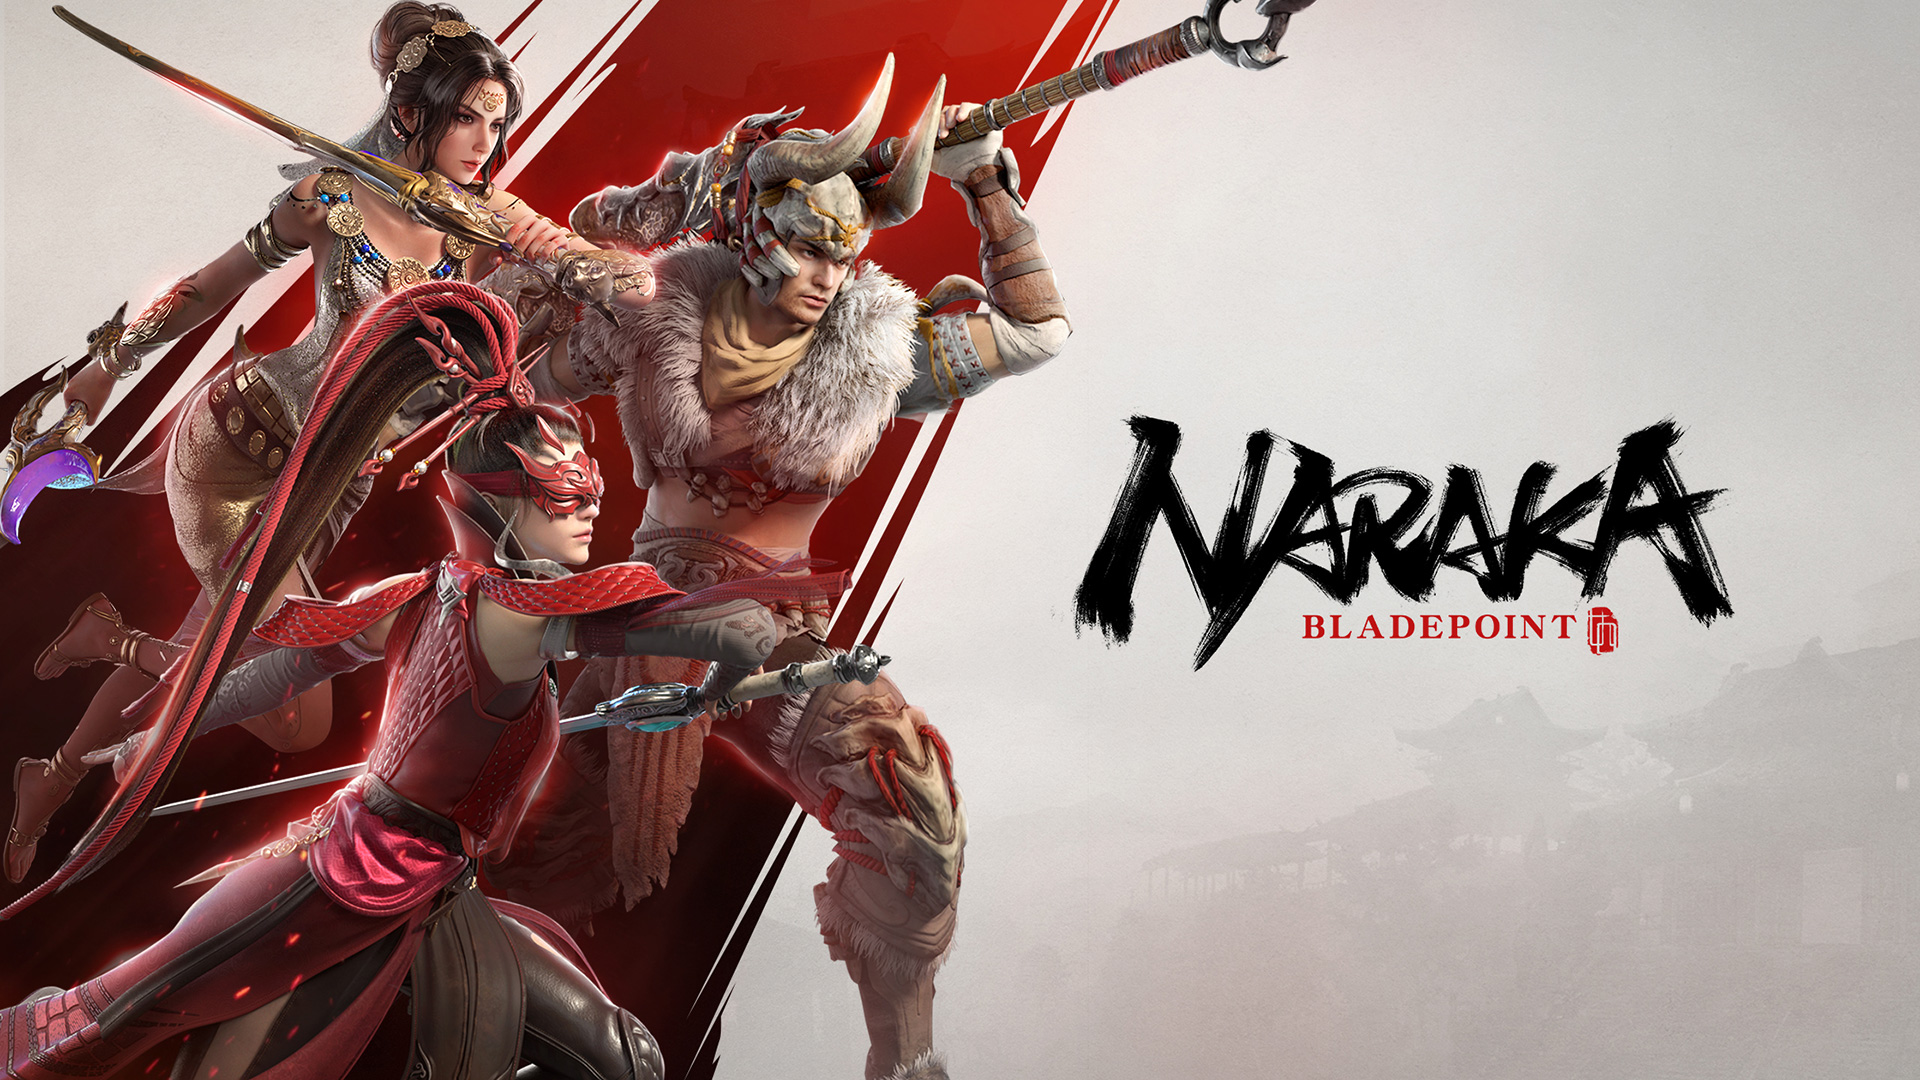 Le jeu de combat Naraka : Bladepoint sera bientôt disponible sur PlayStation 5